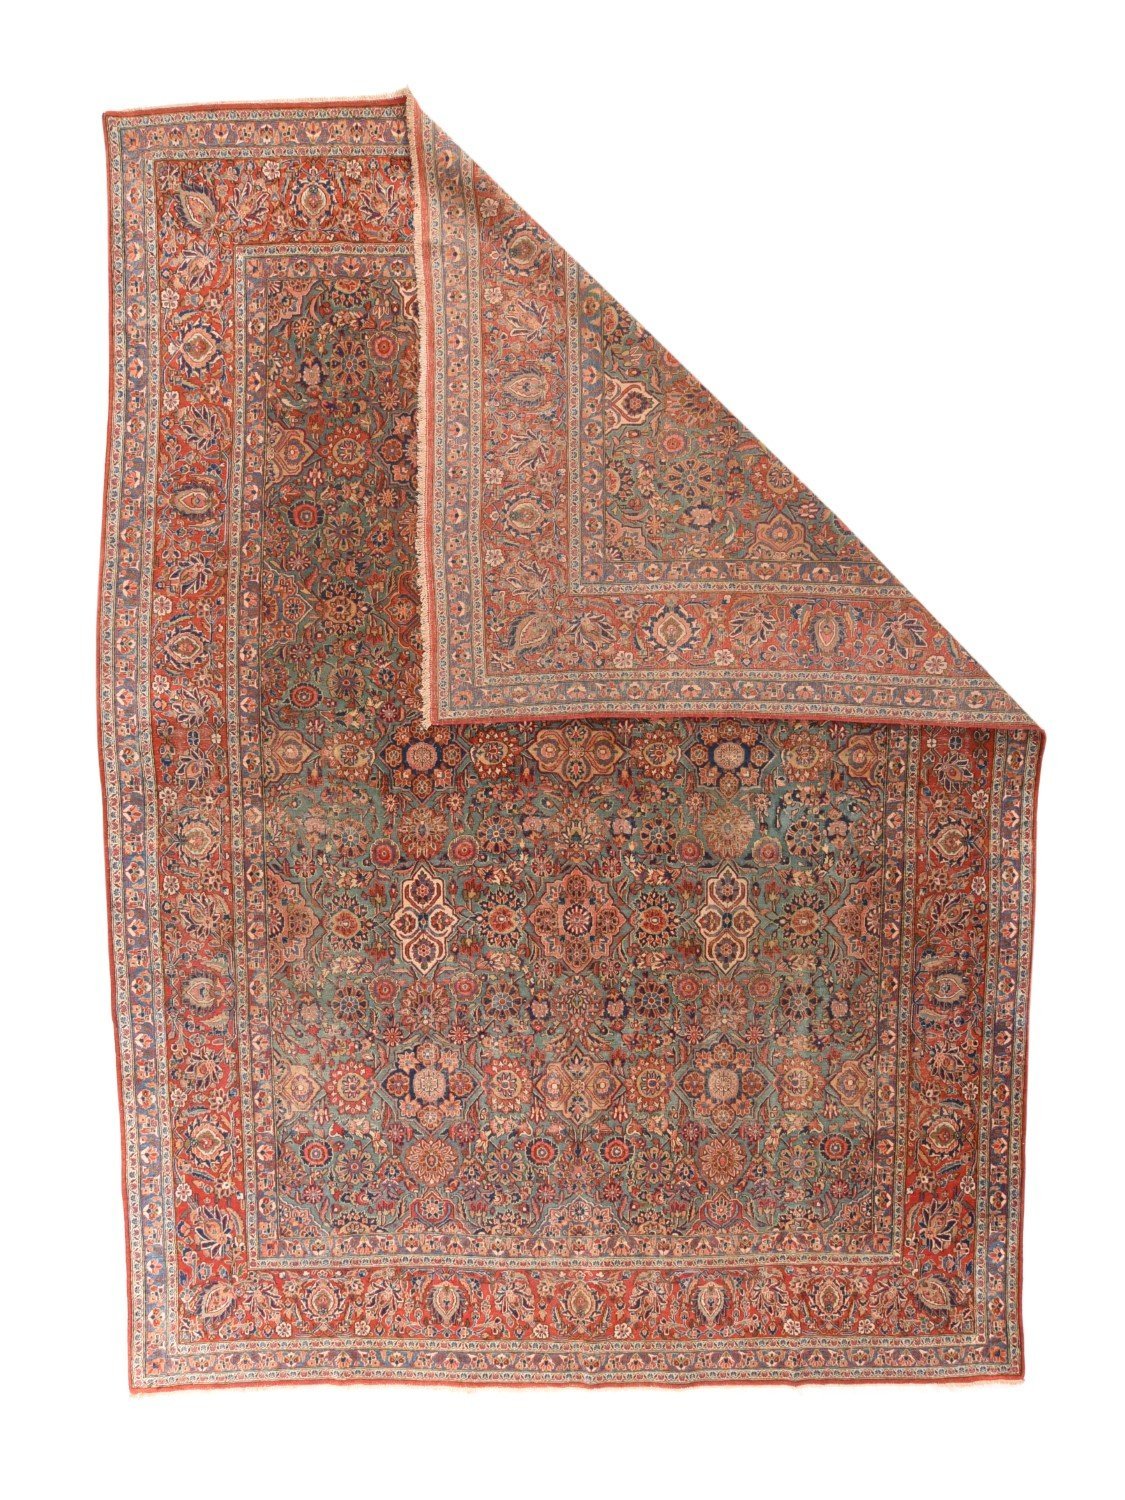 Fine Antique Persian Kashan, Size 8'4" X 11'9"